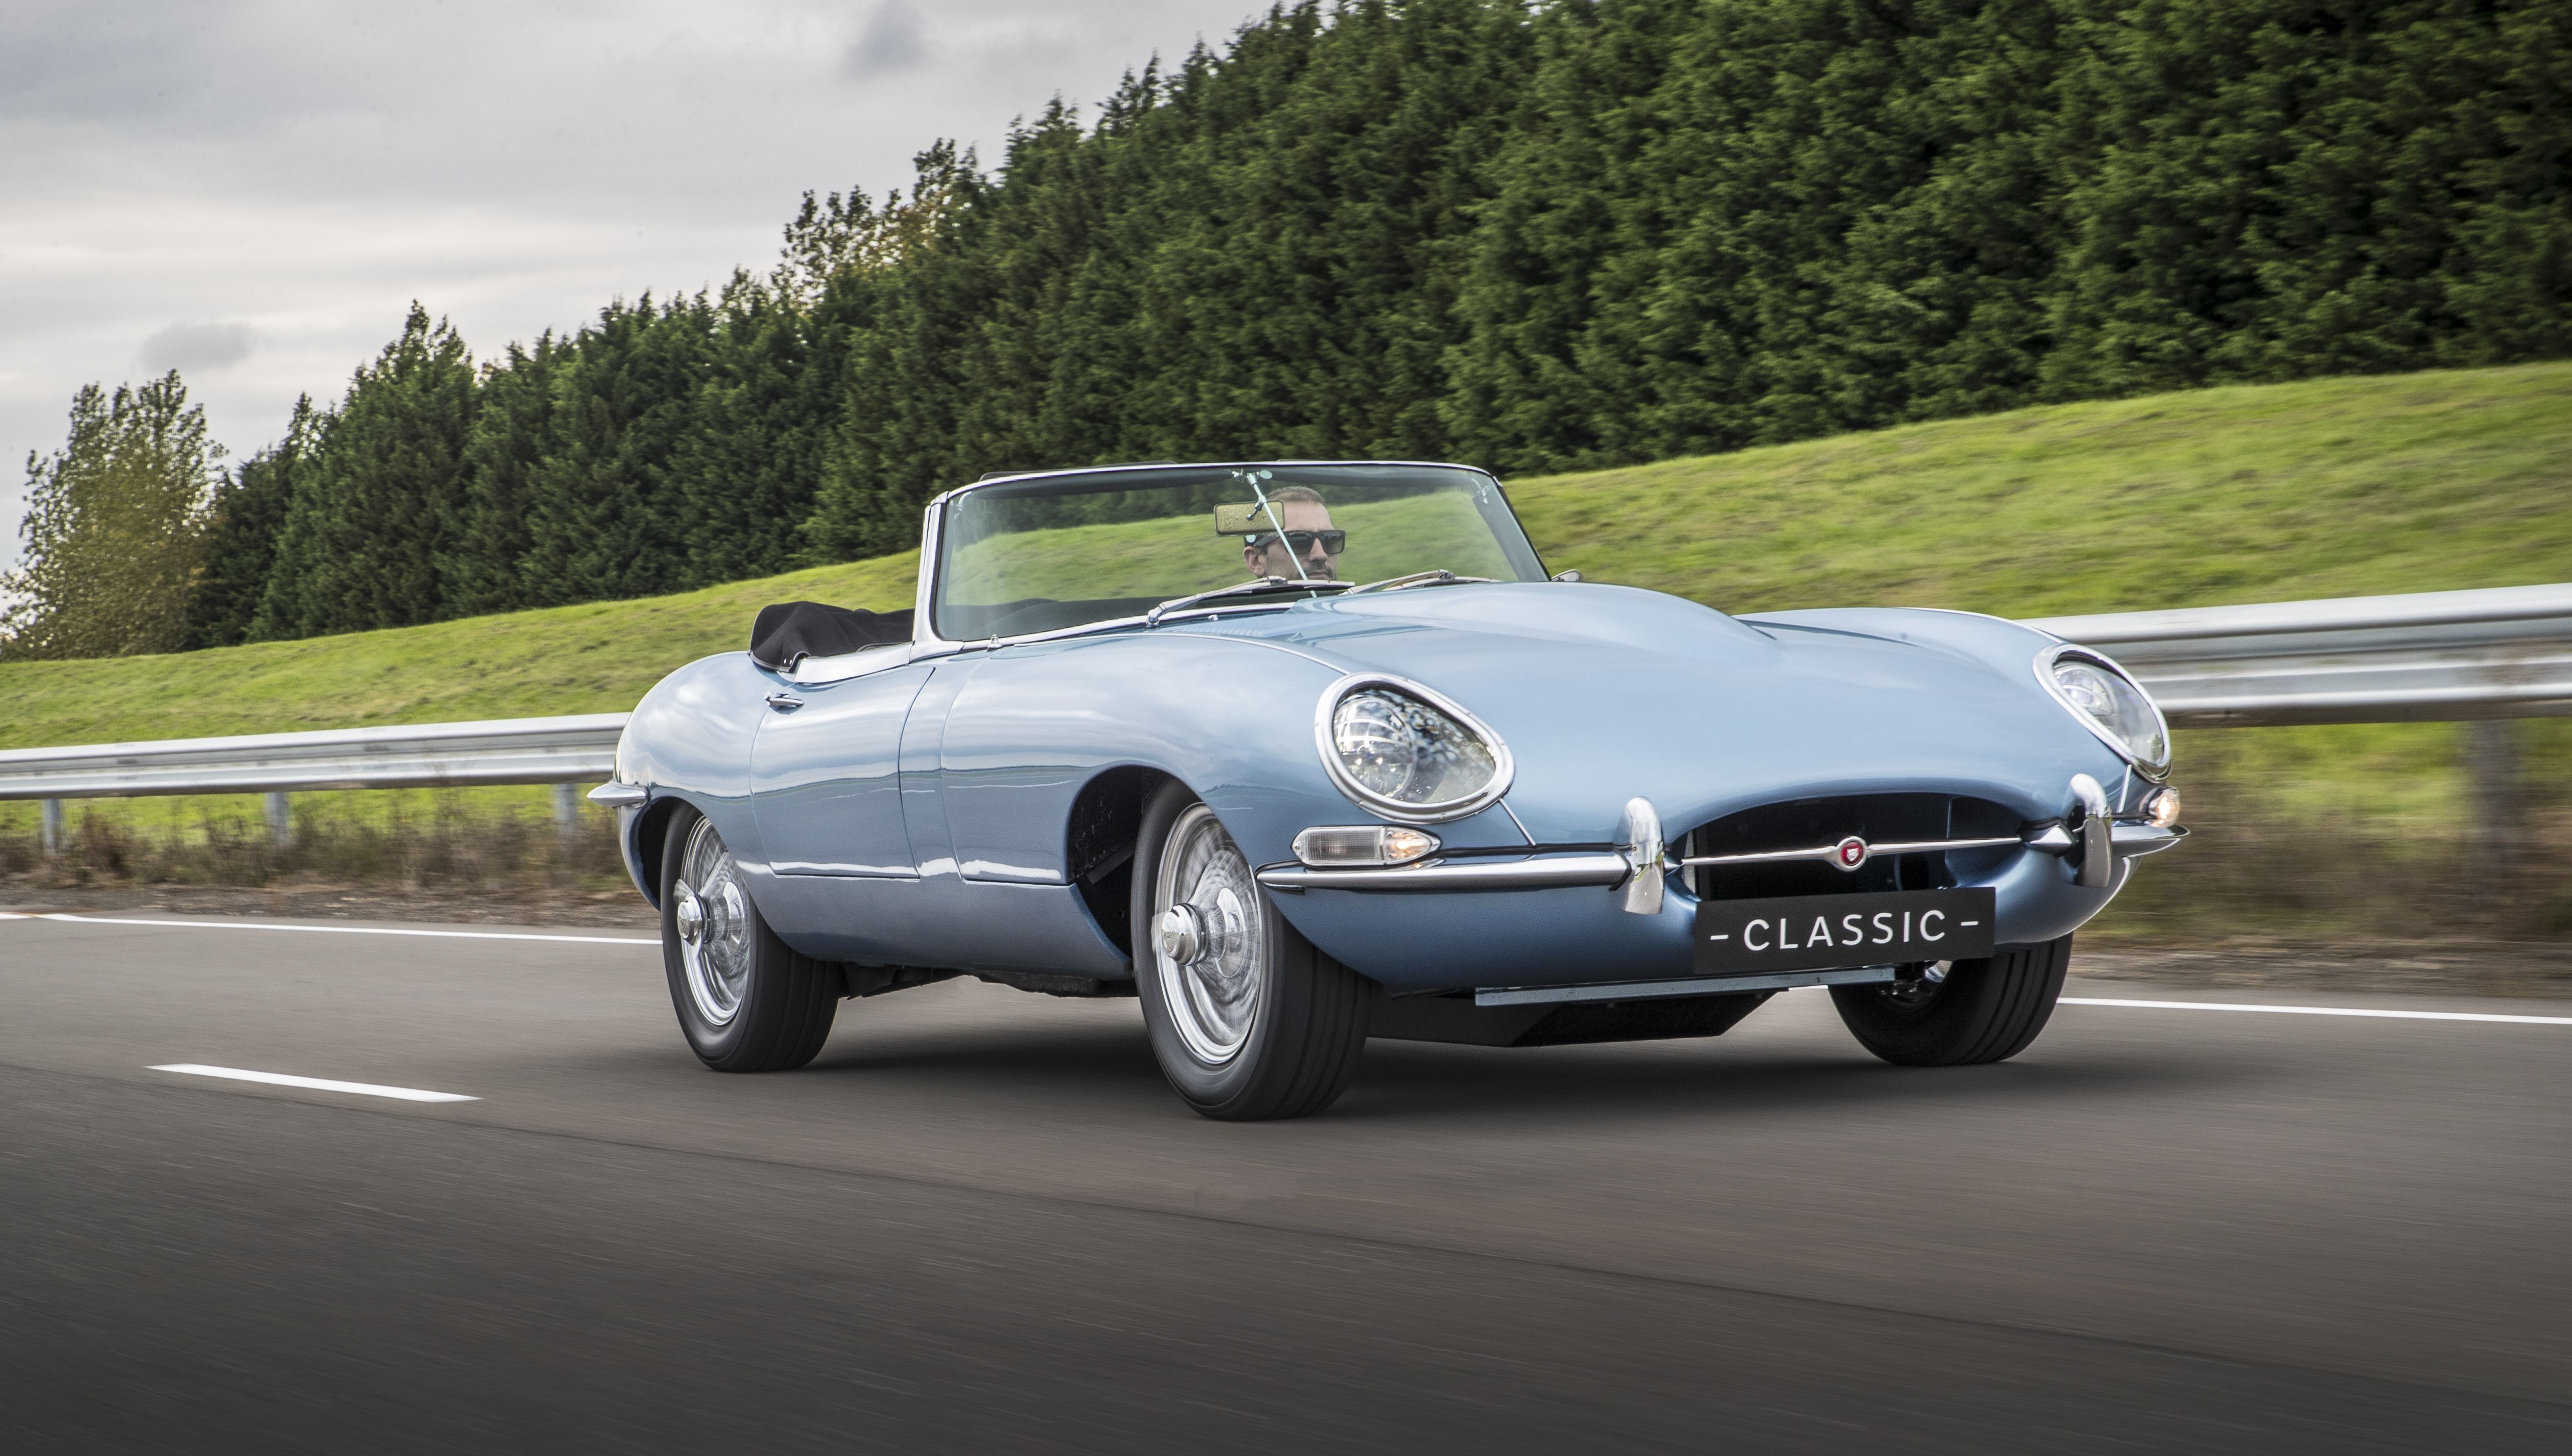 Jaguar has created a sleek electric car based on classic